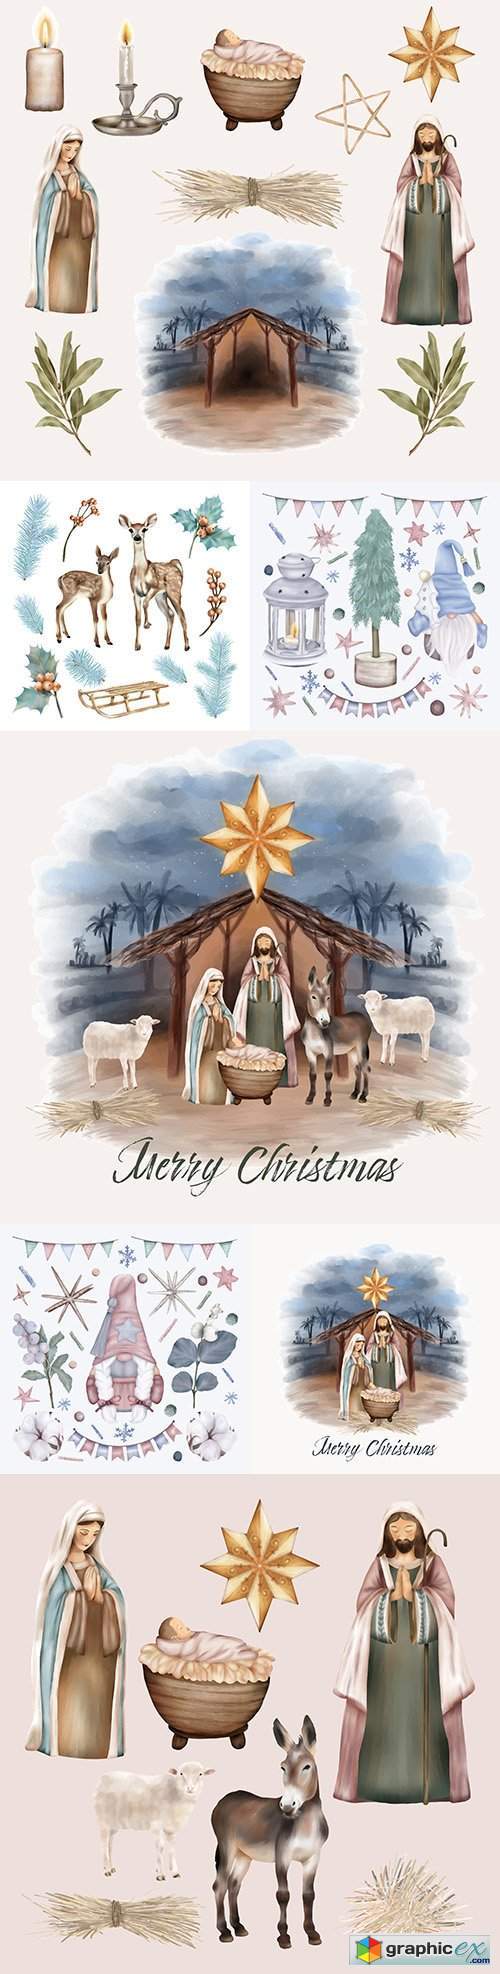 Christmas set Baby Jesus and Virgin Mary Illustration